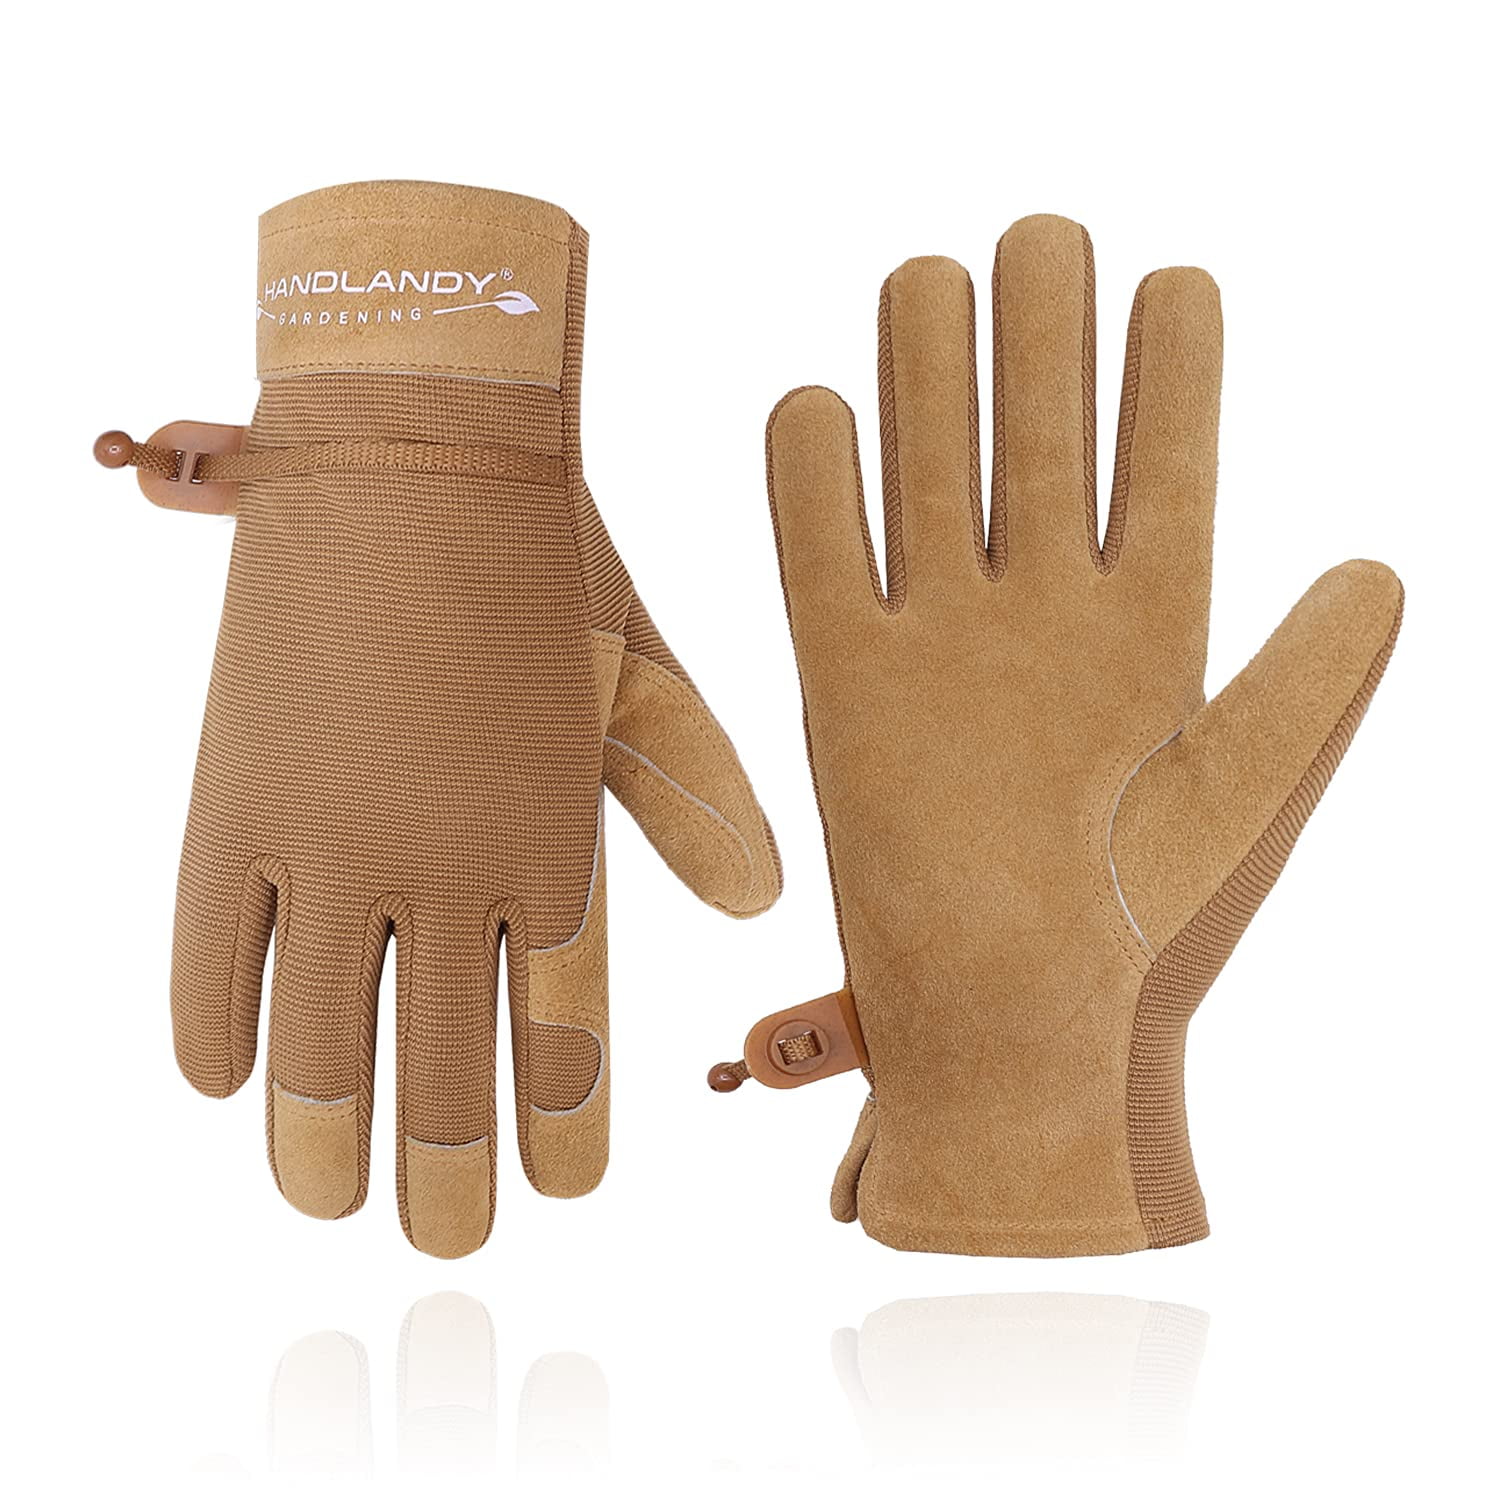 100% Waterproof Gloves for Men and Women, Winter Work Gloves for